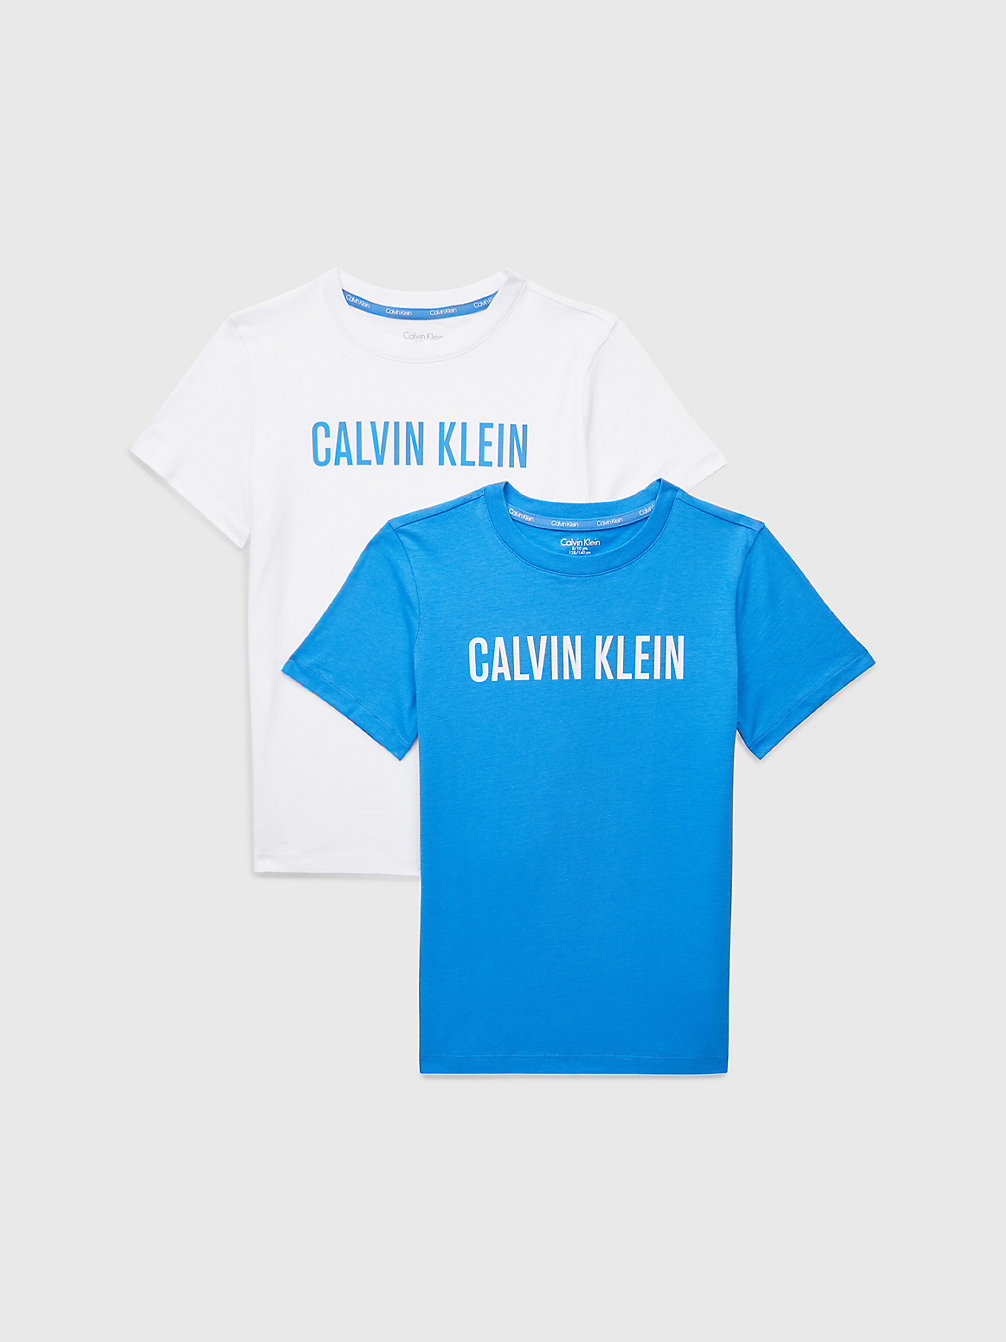 ELECTRICAQUA/PVHWHITE > Комплект футболок для мальчиков 2 шт. - Intense Power > undefined boys - Calvin Klein